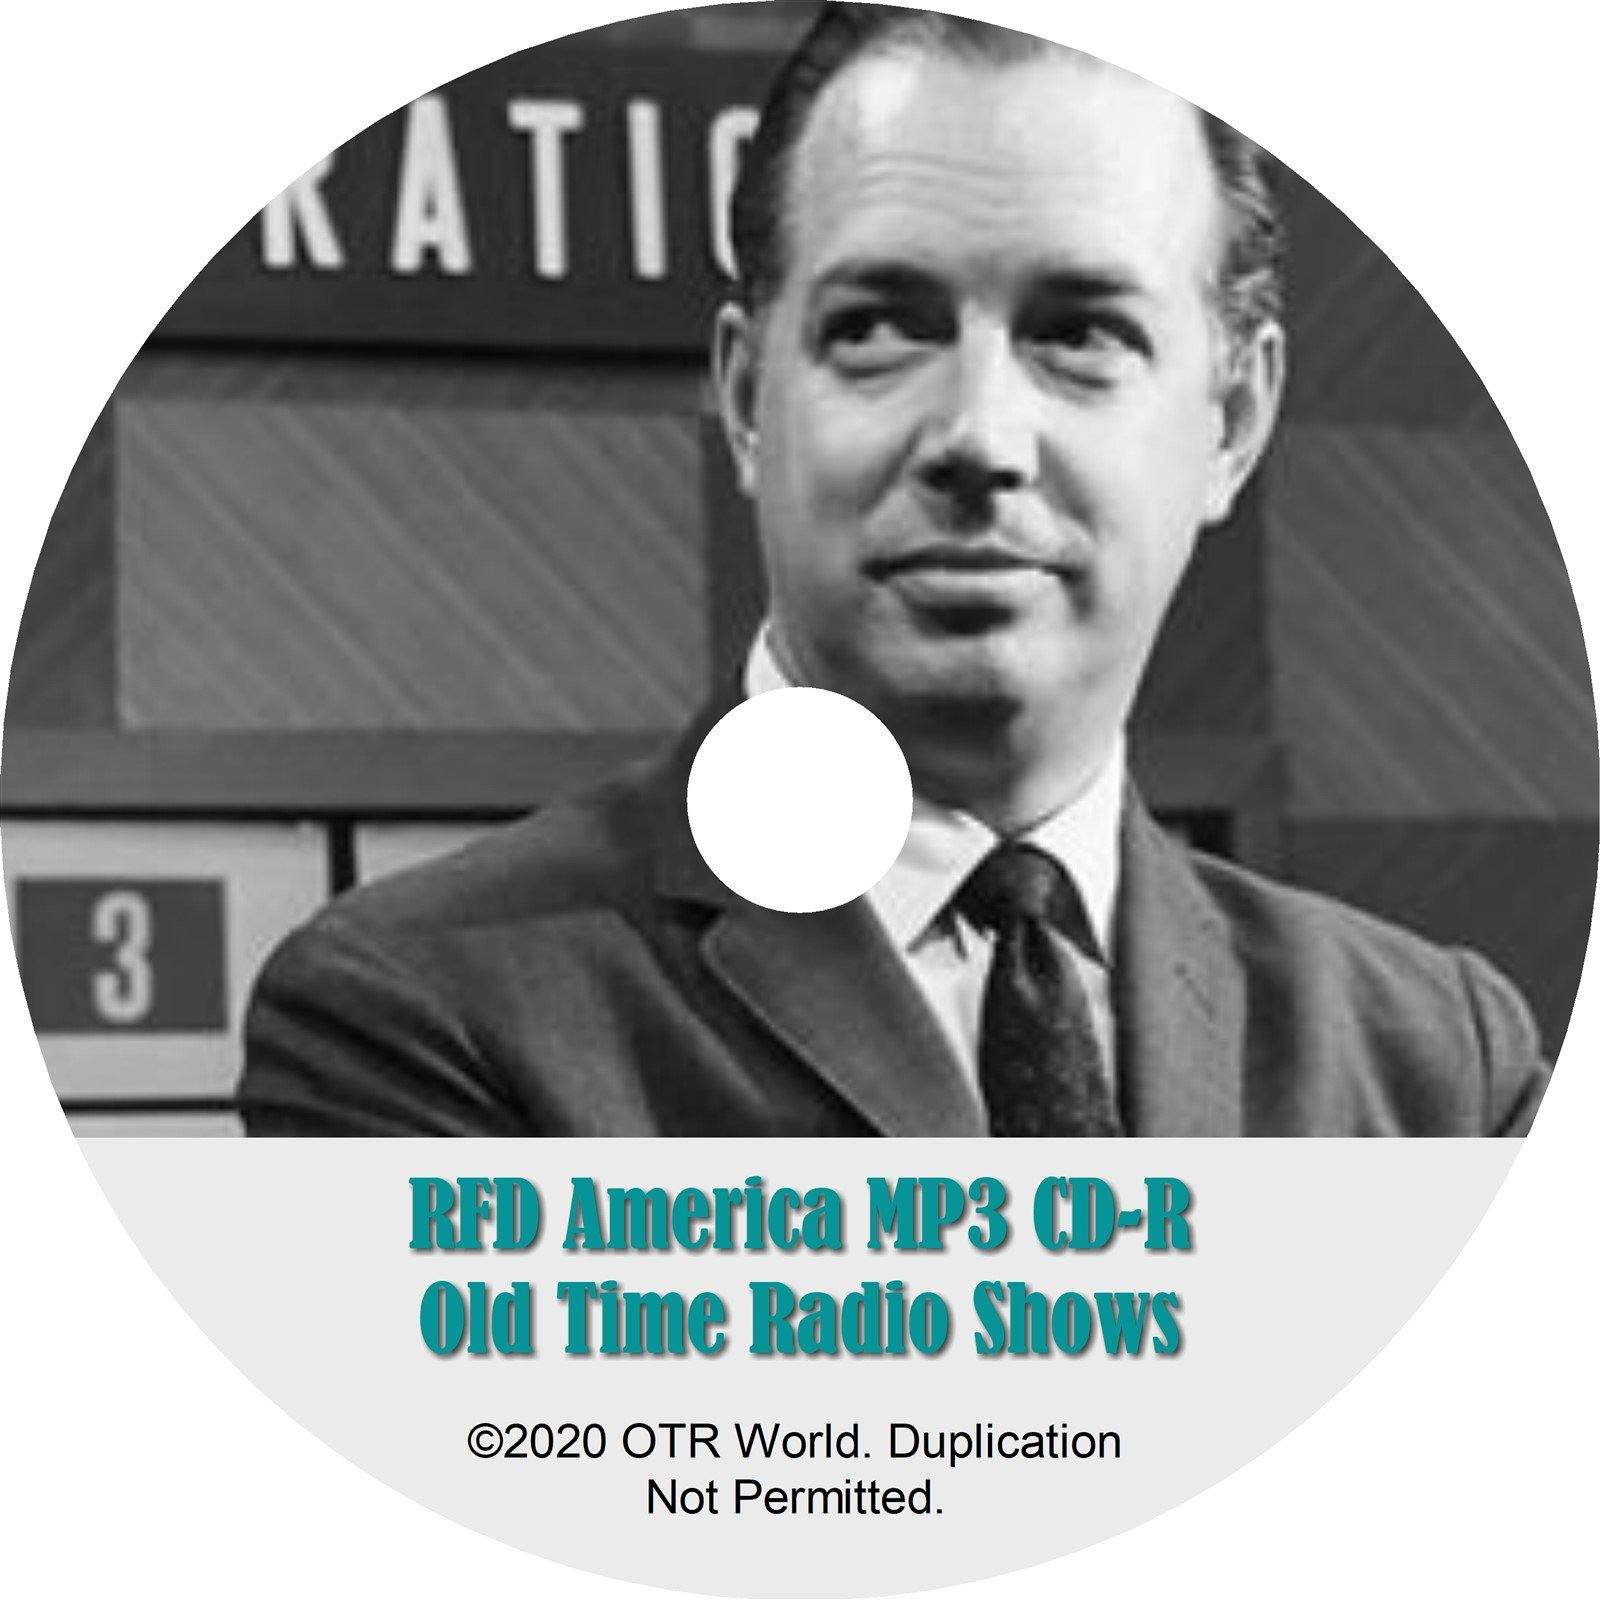 RFD America OTR Old Time Radio Shows MP3 On CD-R 2 Episodes - OTR World